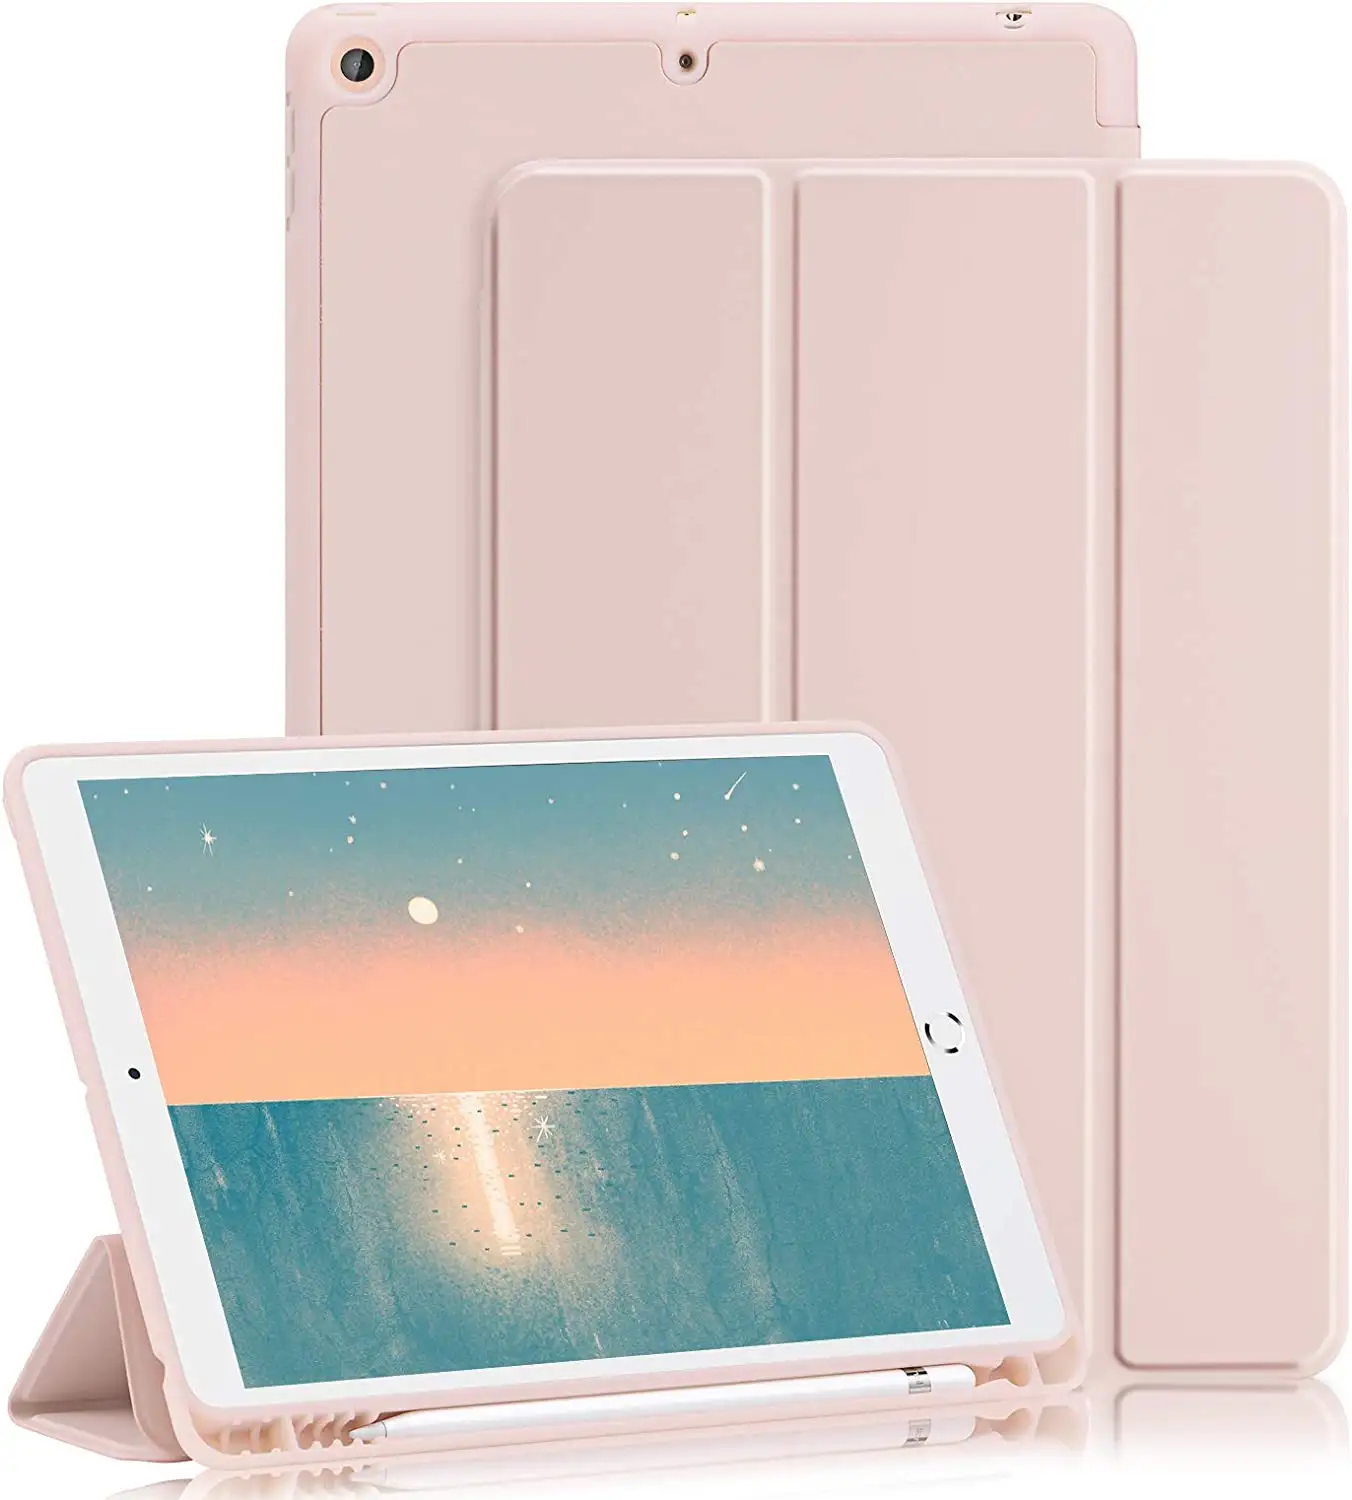 Custodia di vendita calda per ipad 10.2 custodia per Tablet con portamatite